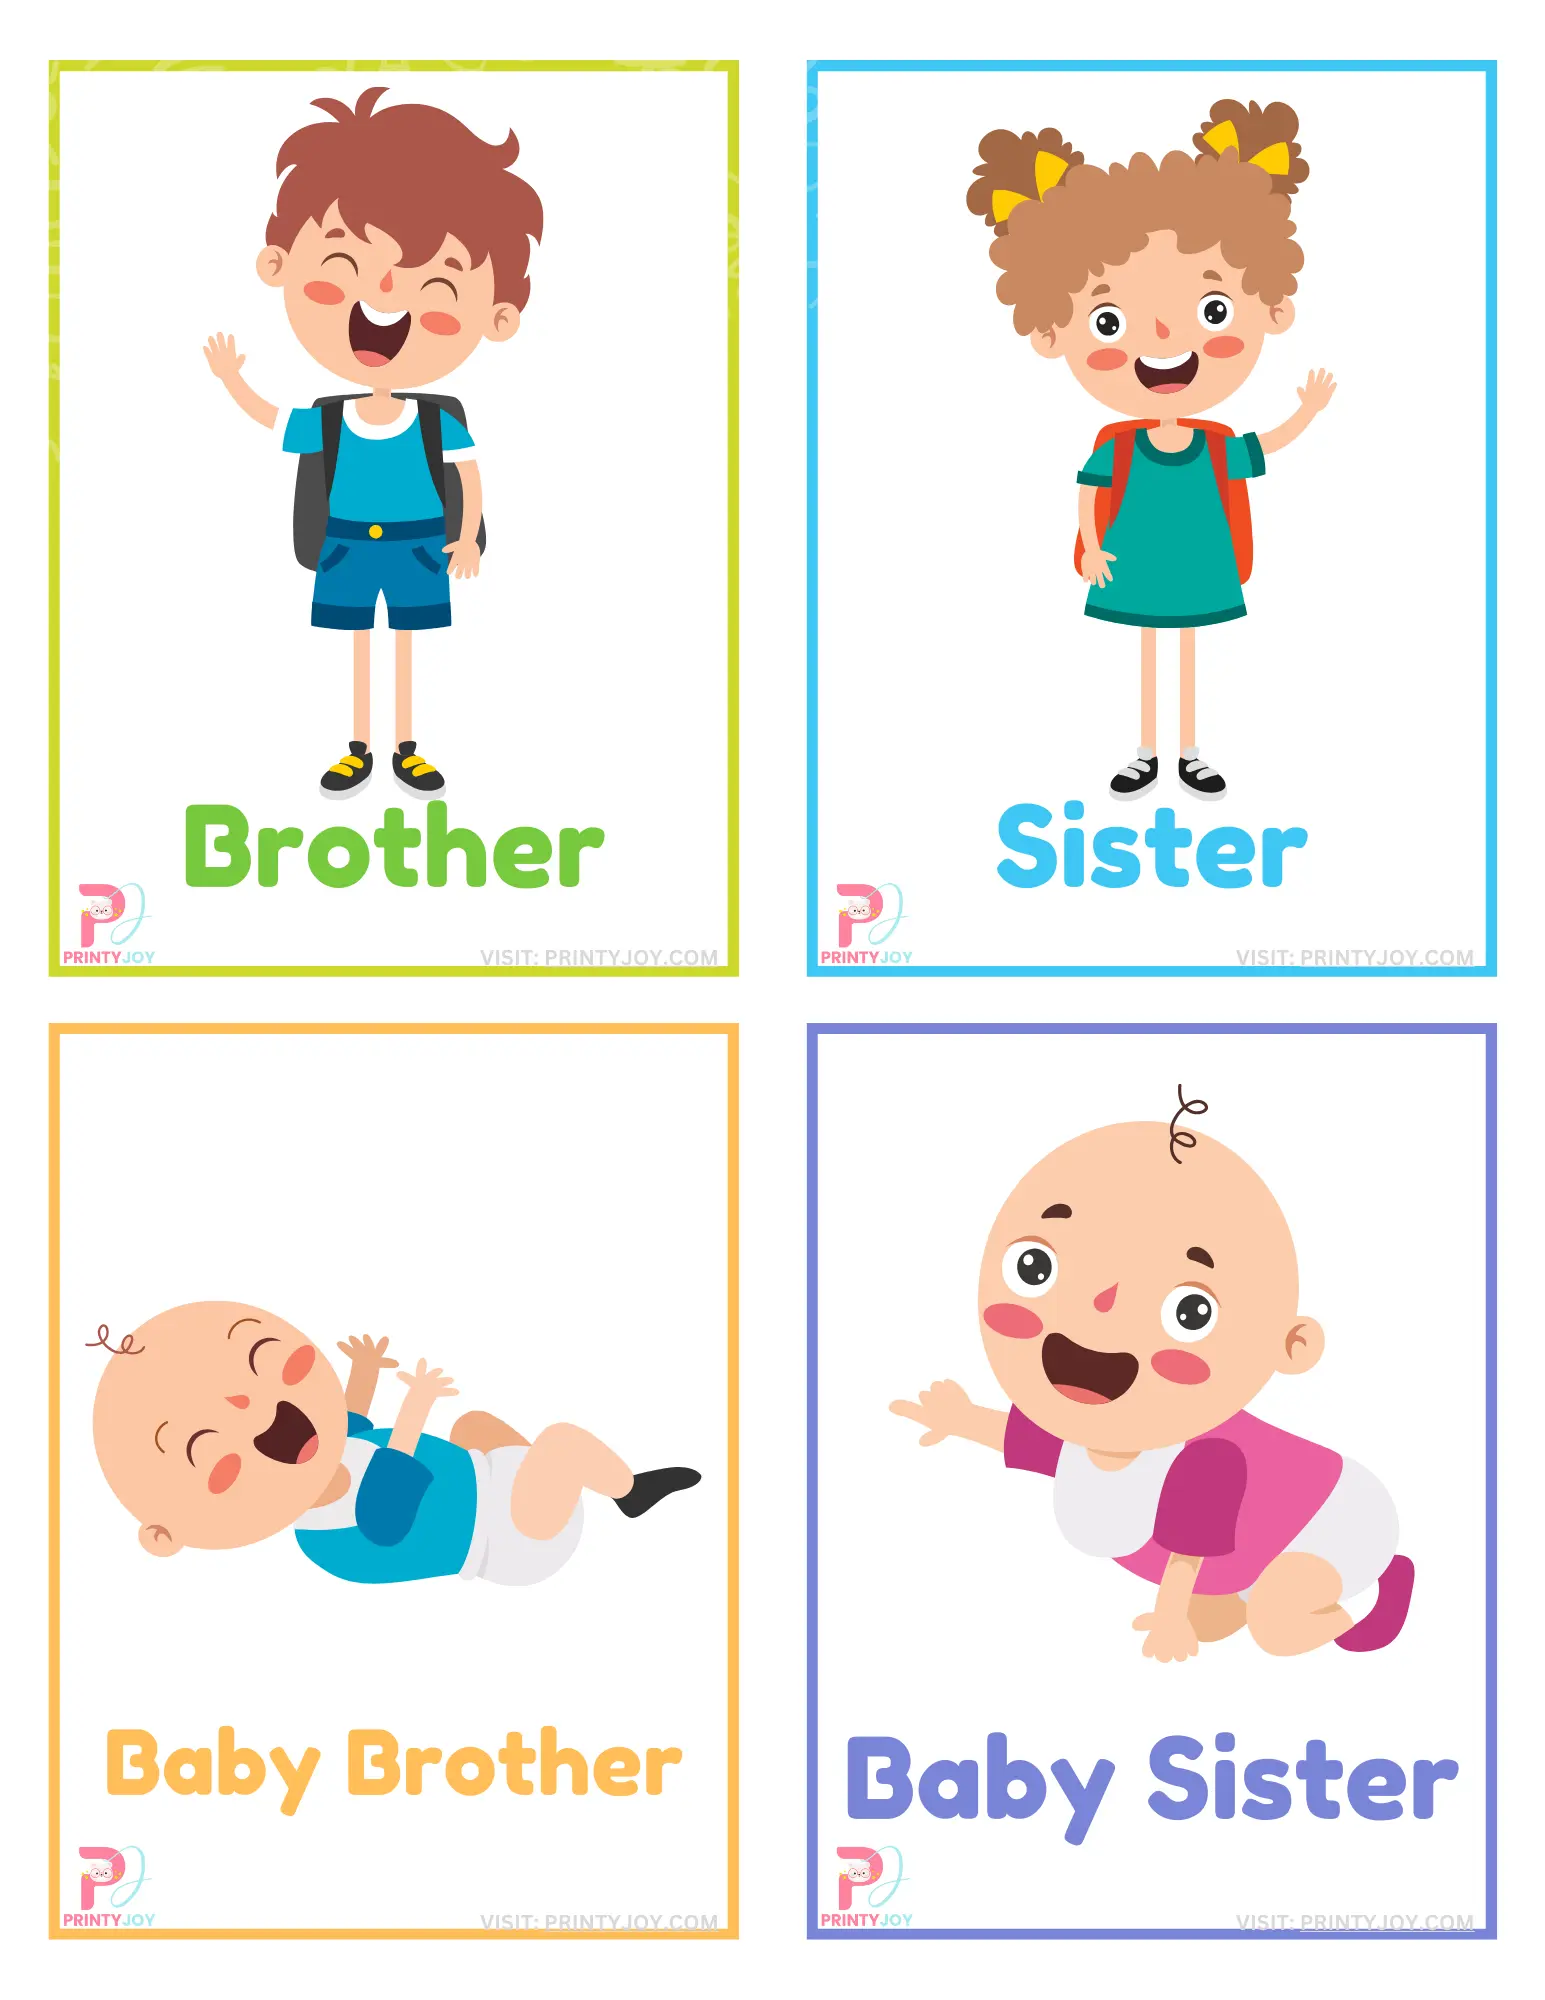 Family Members Flashcards for Kindergarten